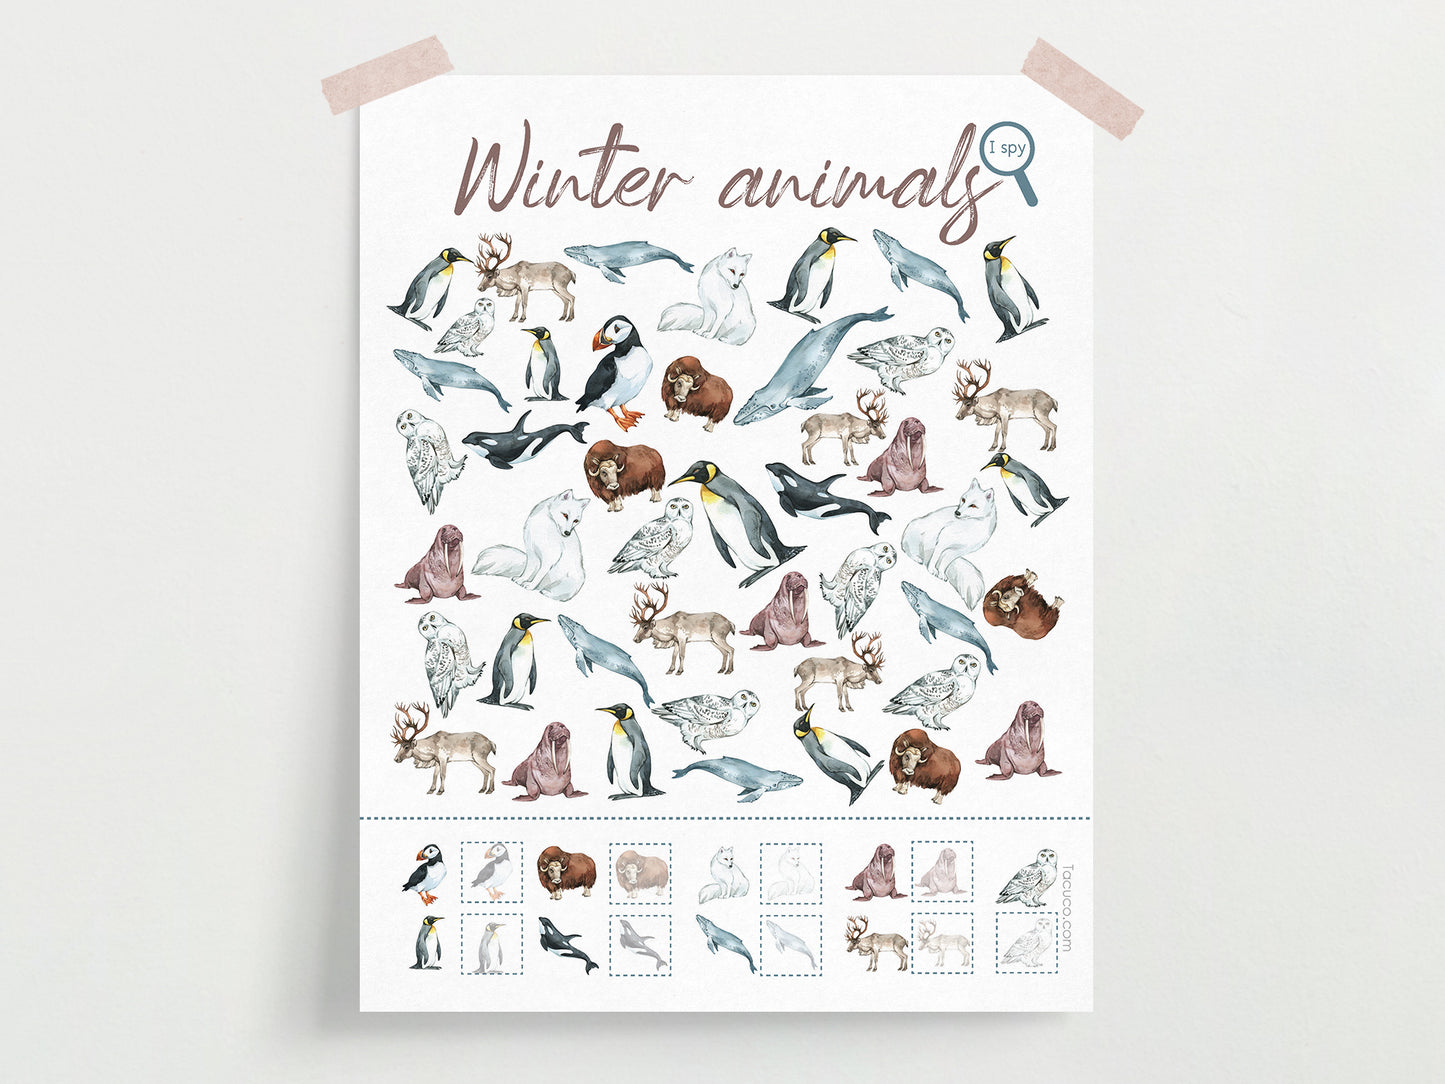 Winter animals activity pack